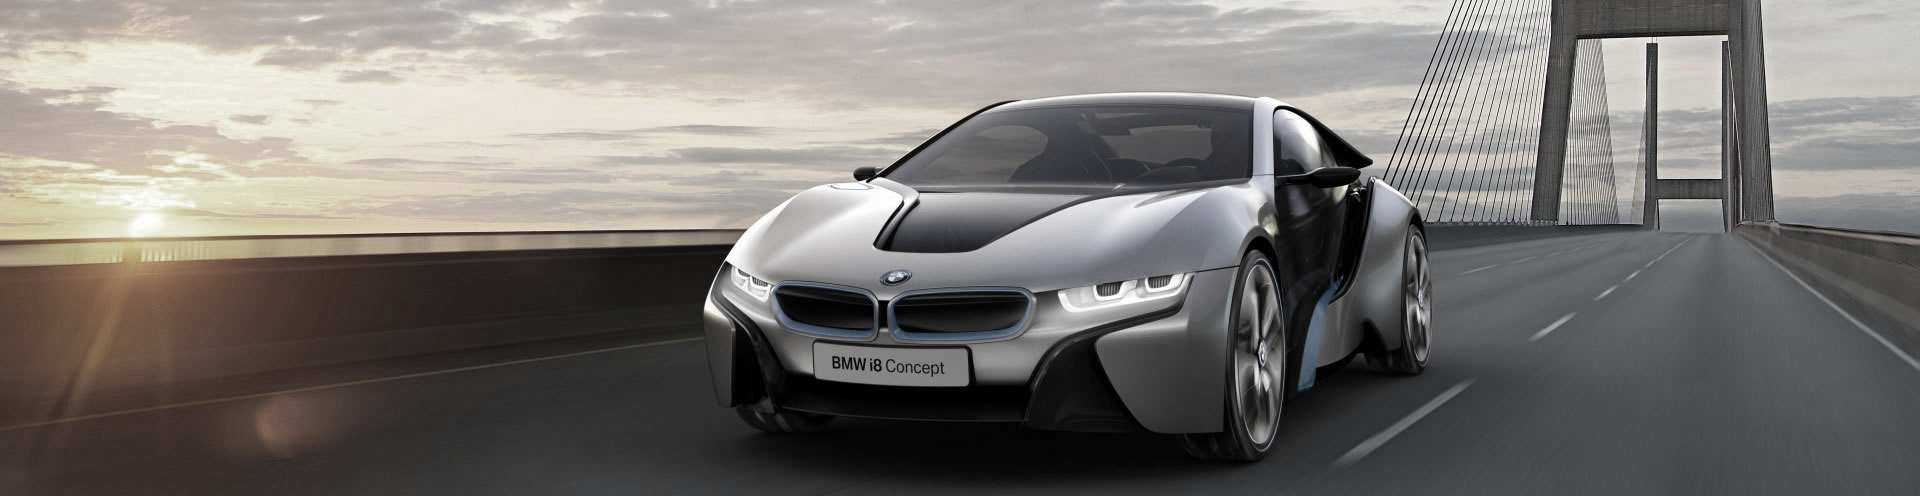 BMW-i8-Concept-2011-widescreen-08